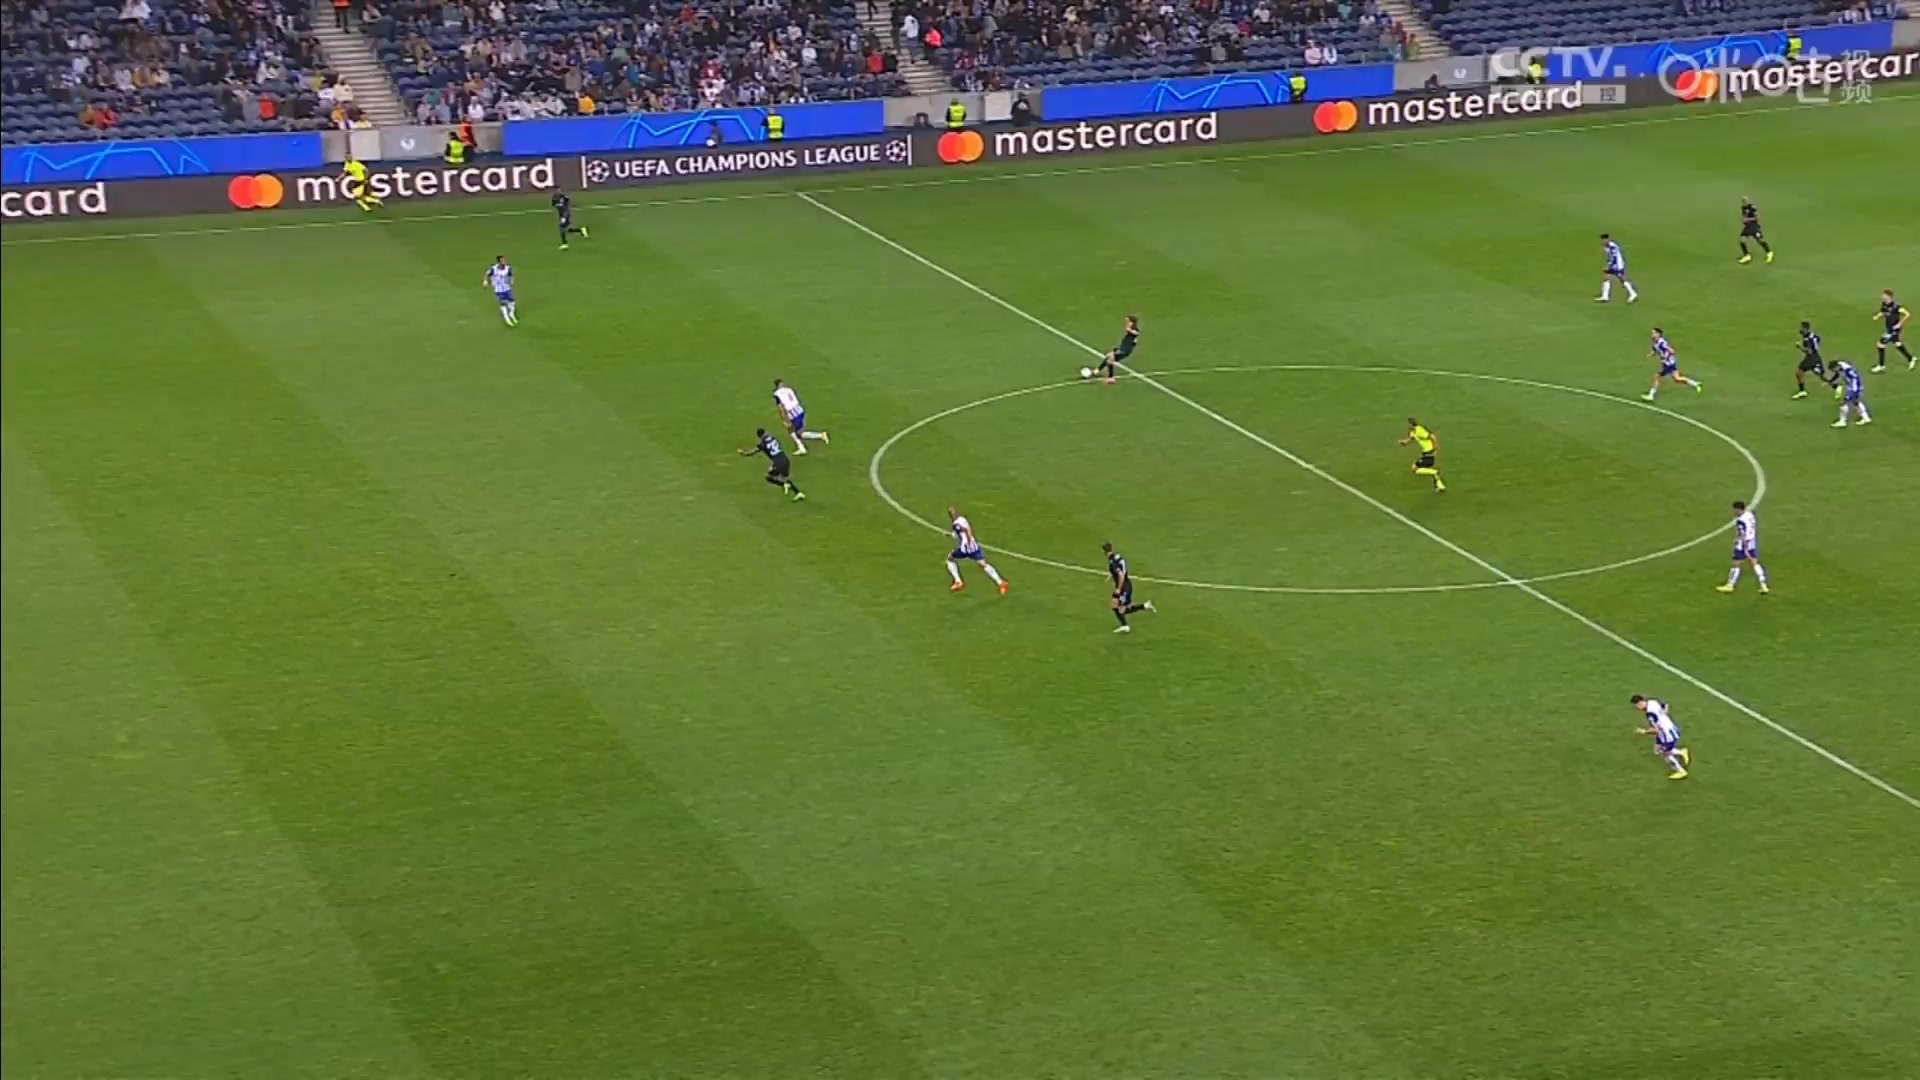 UEFA CL FC Porto Vs Club Brugge Antonio Eromonsele Nordby Nusa Goal in 89 min, Score 0:4